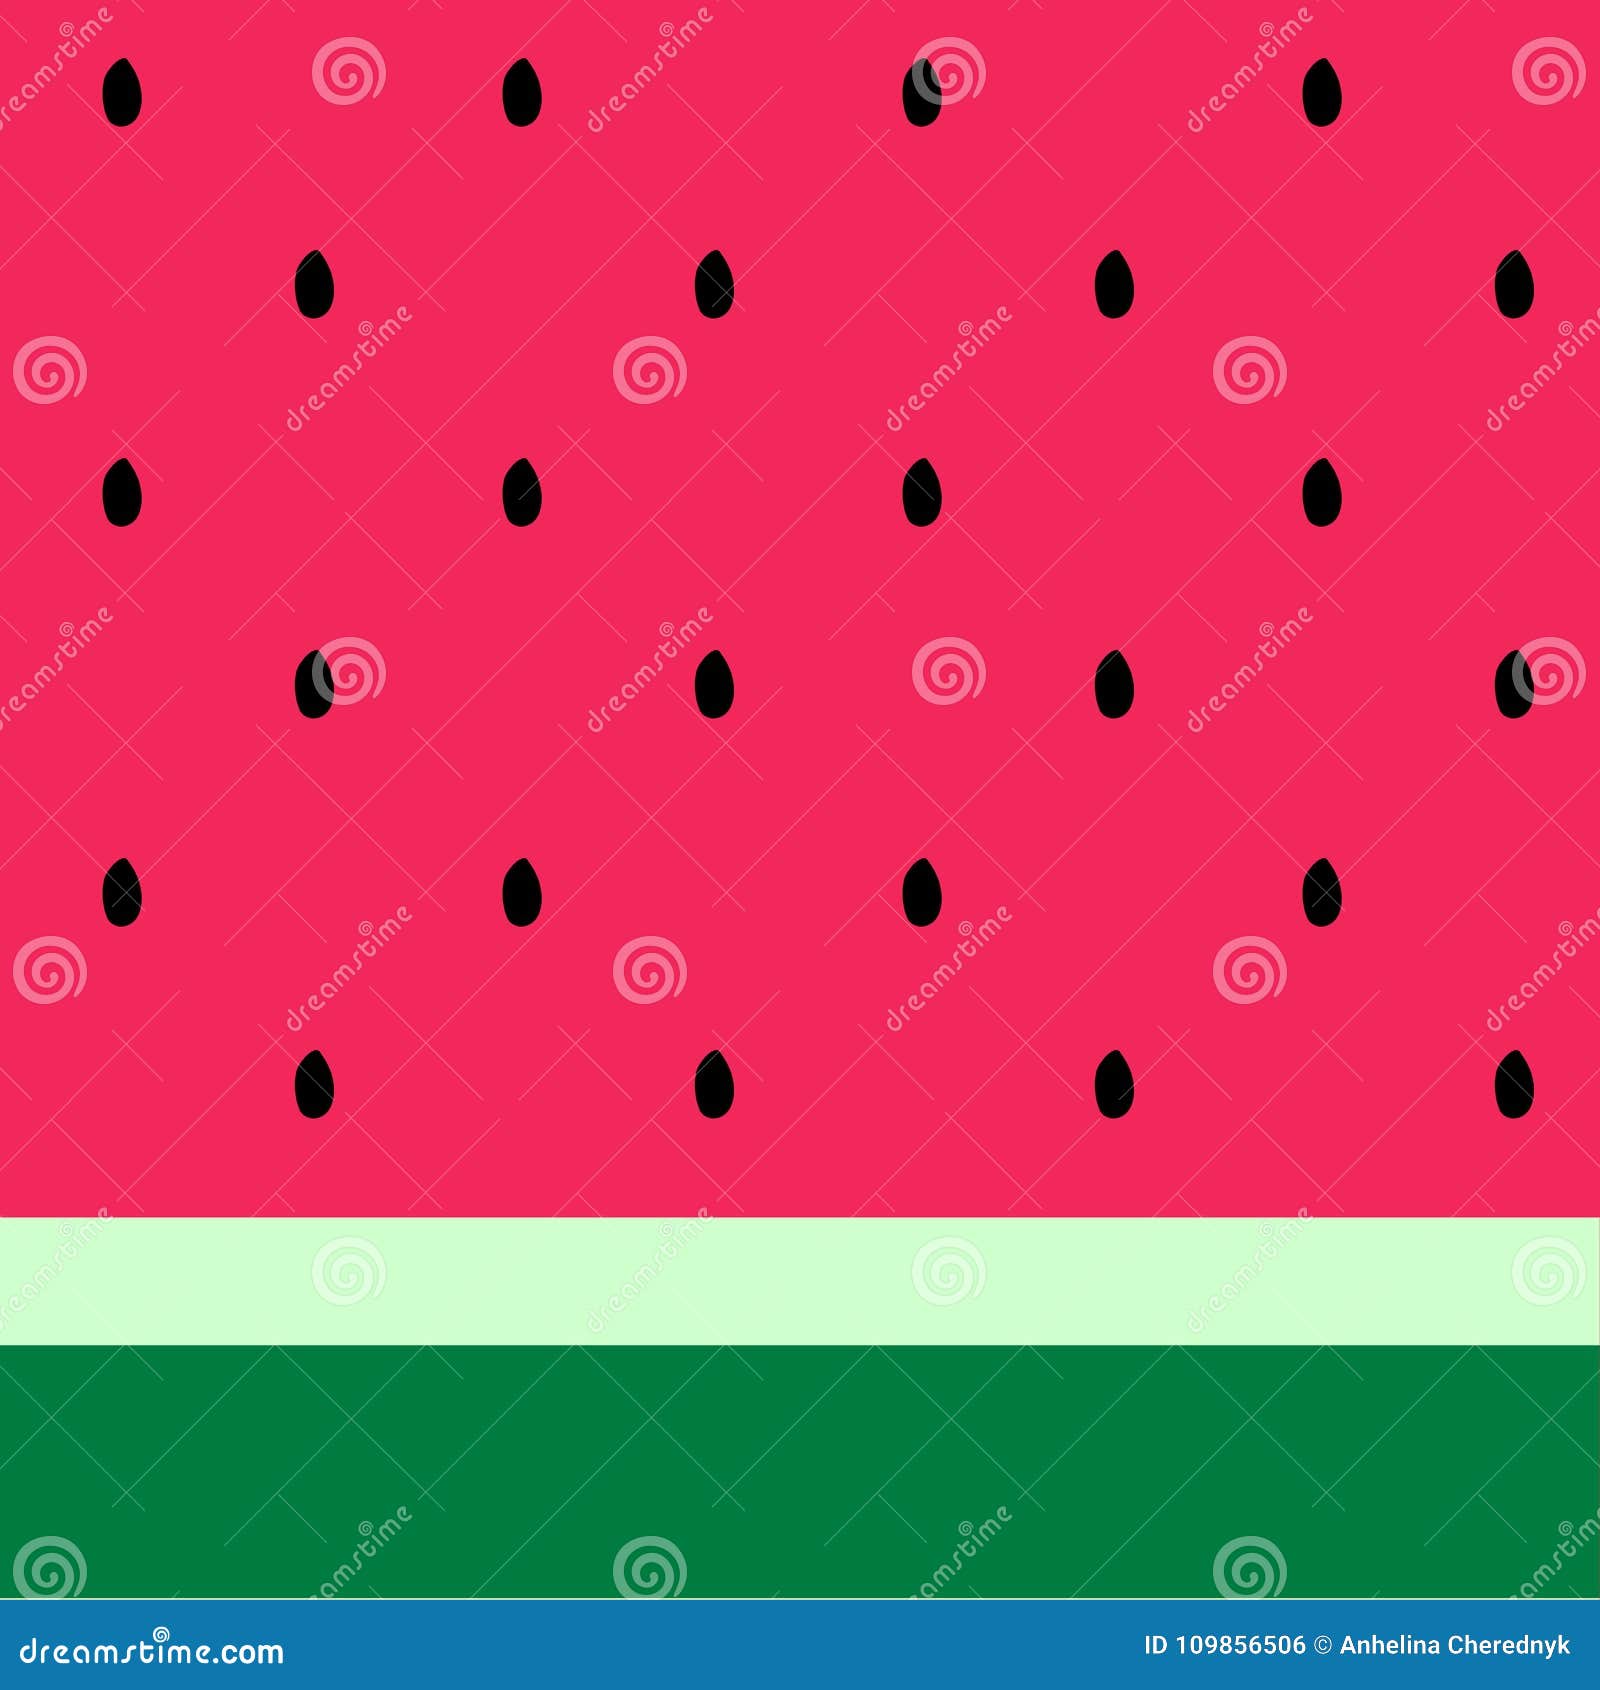 Watermelon Wallpaper 66 pictures